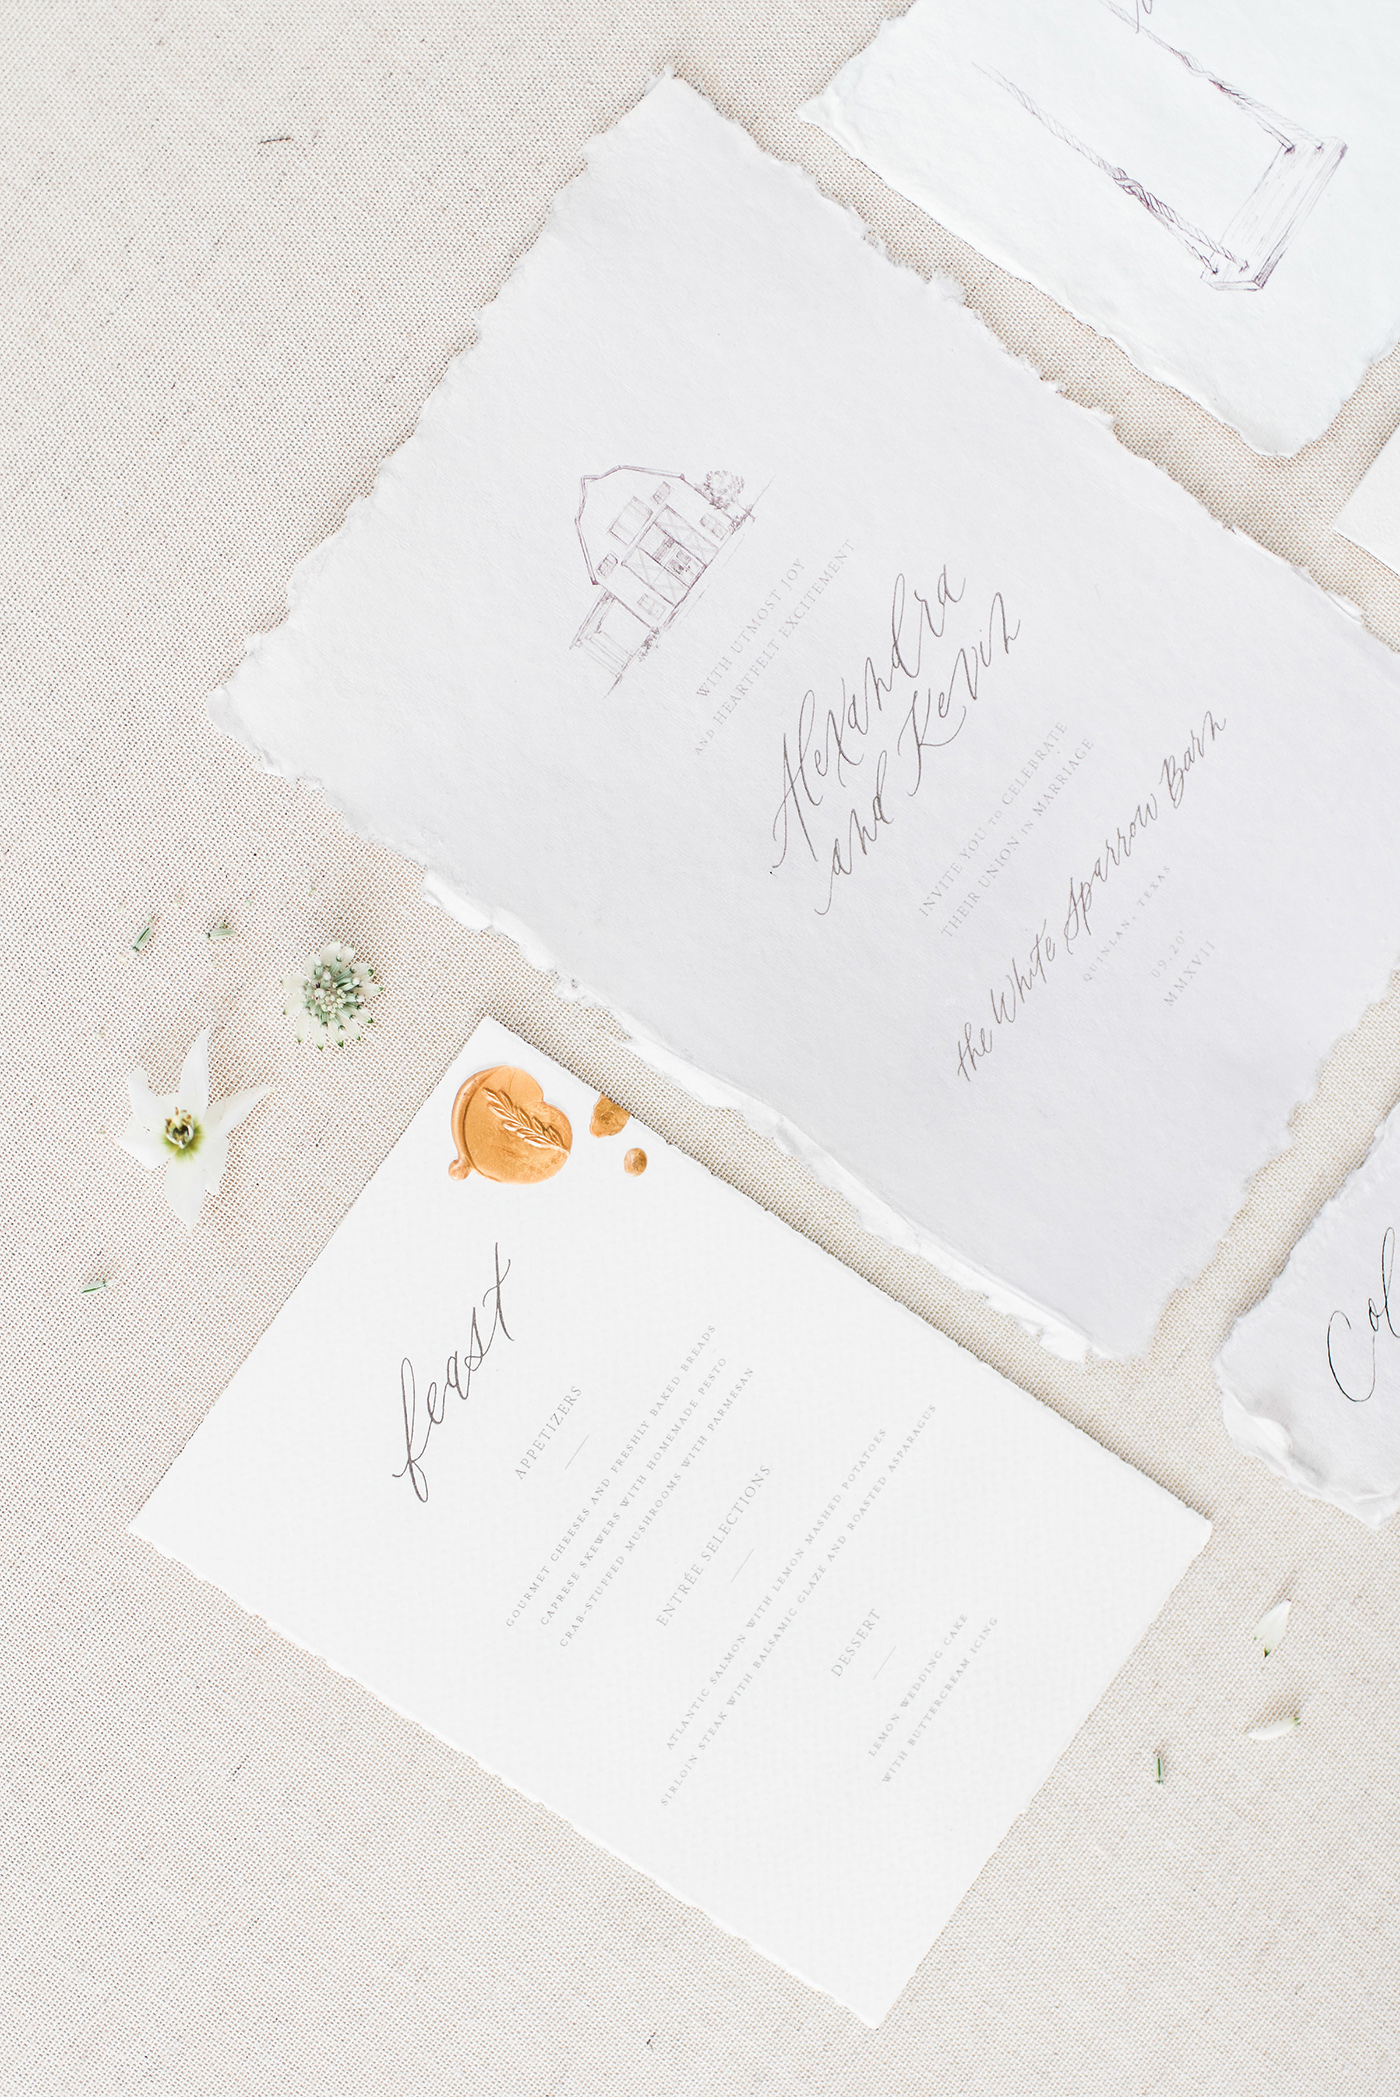 Sarah Ann Design | White Sparrow Wedding Invitations